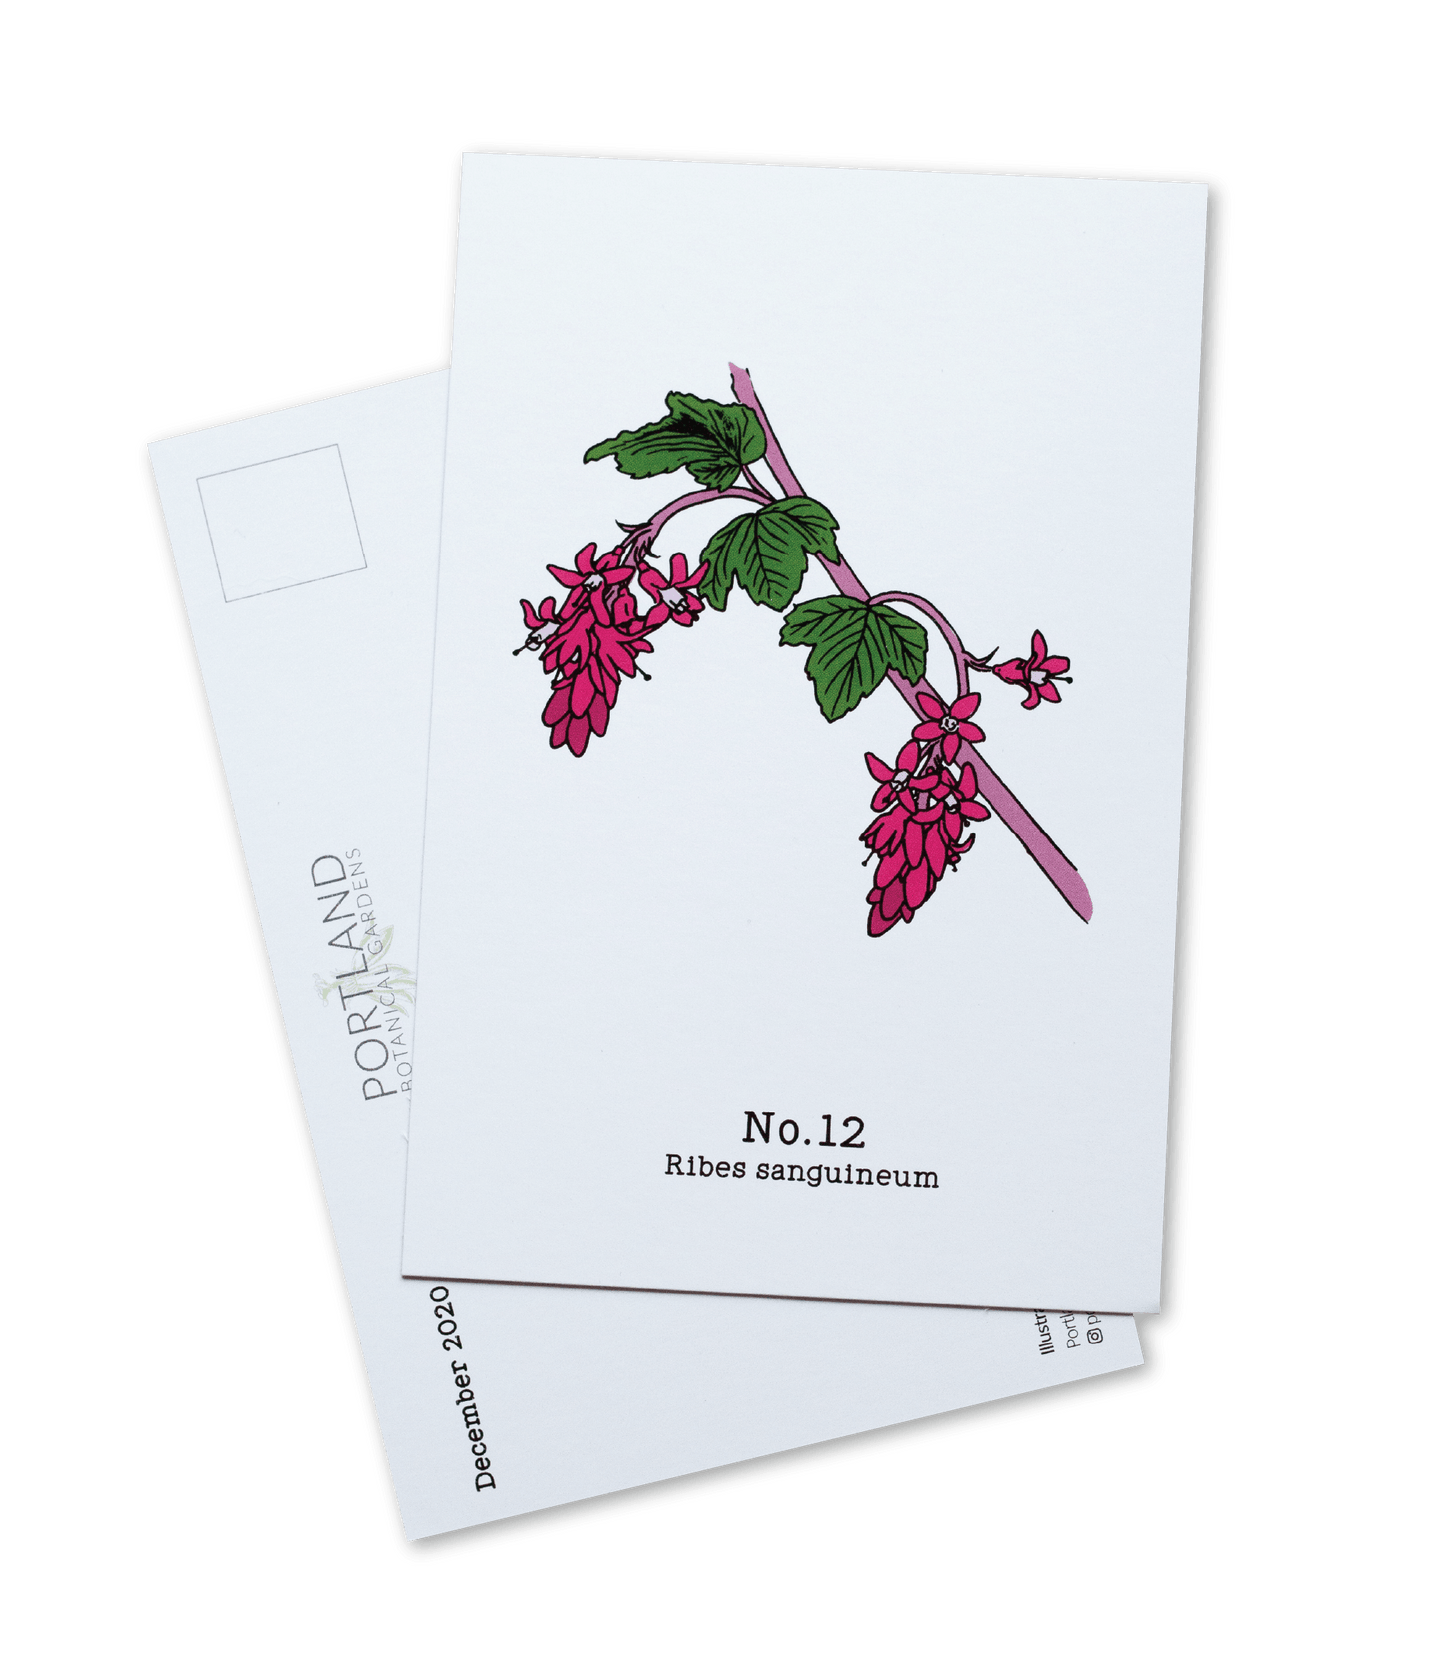 Oregon Native Plants (7-12) - 2020 Postcard Set of 6